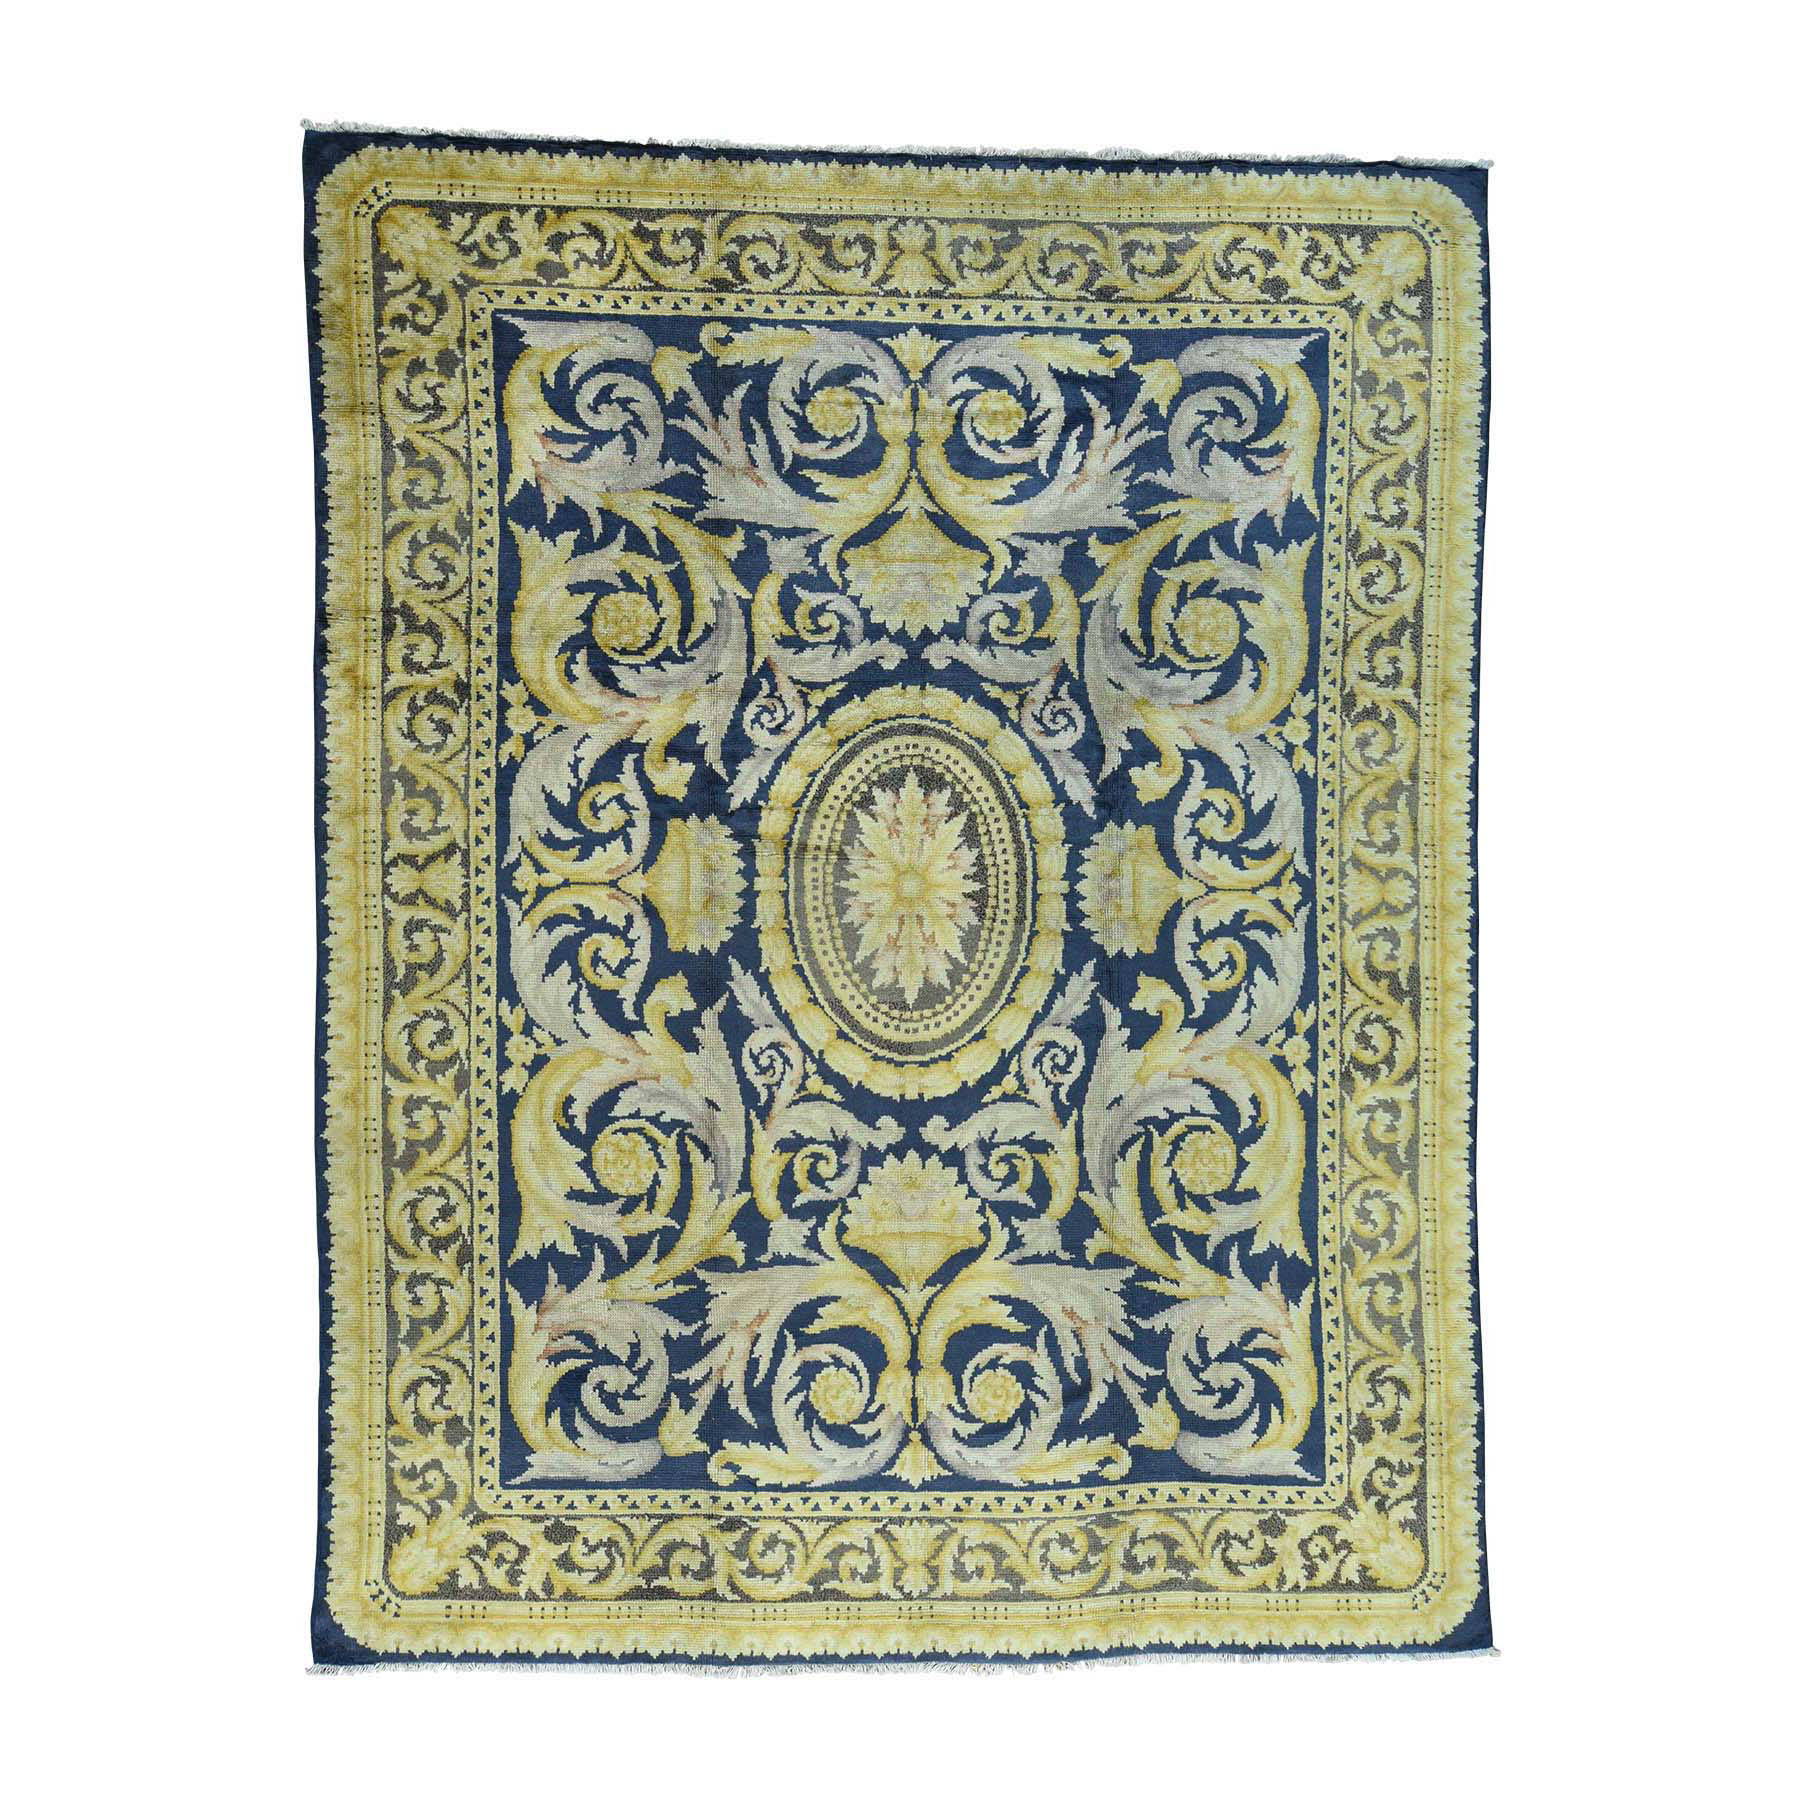 Silk Textured Wool European Design Hand Woven Oriental Rugs